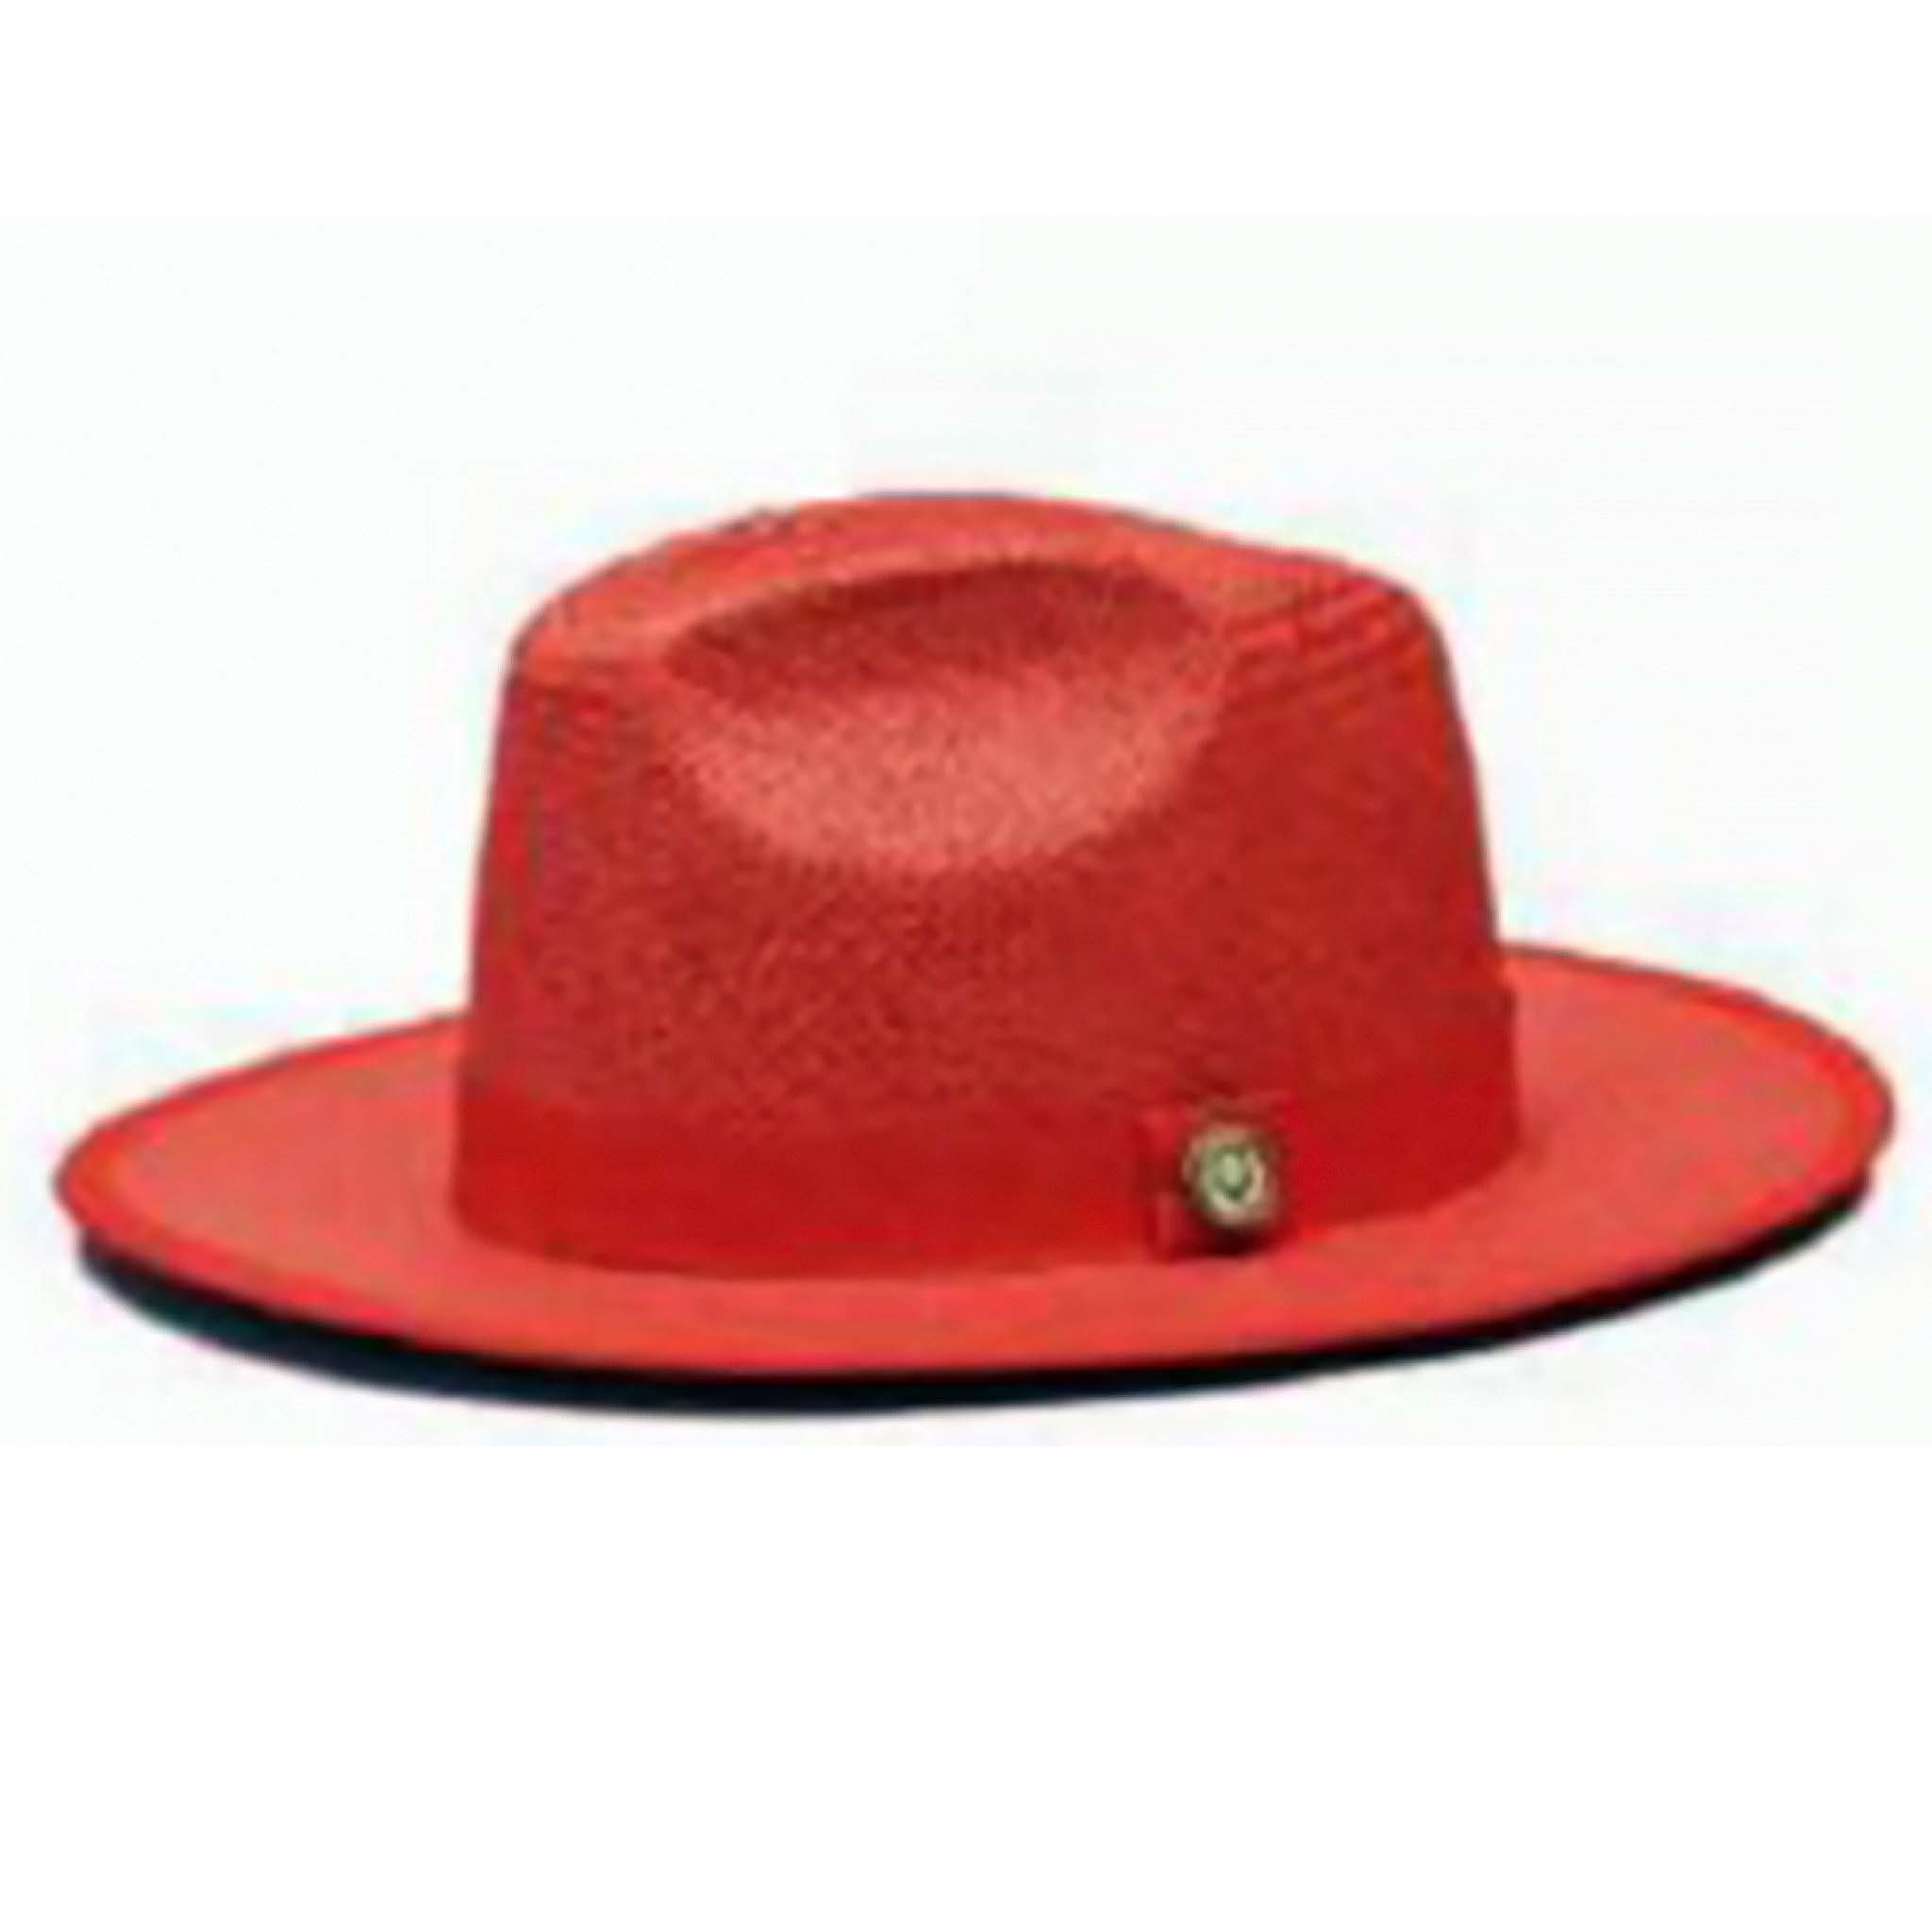 Red Wide-Brim Contrast Bottom Straw Hat - Side View